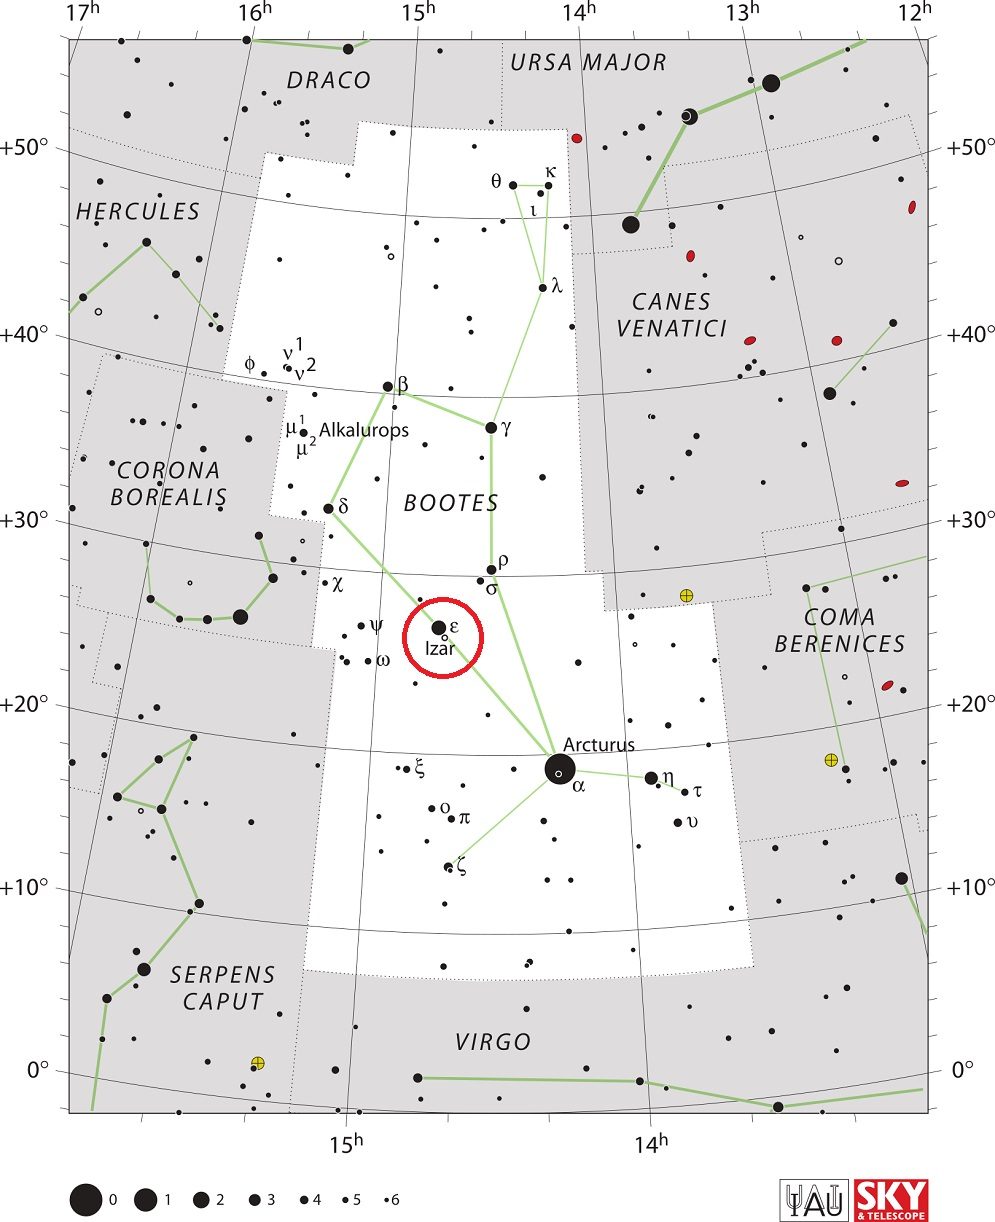 L'étoile Itzar dans la constellation de Volopassus